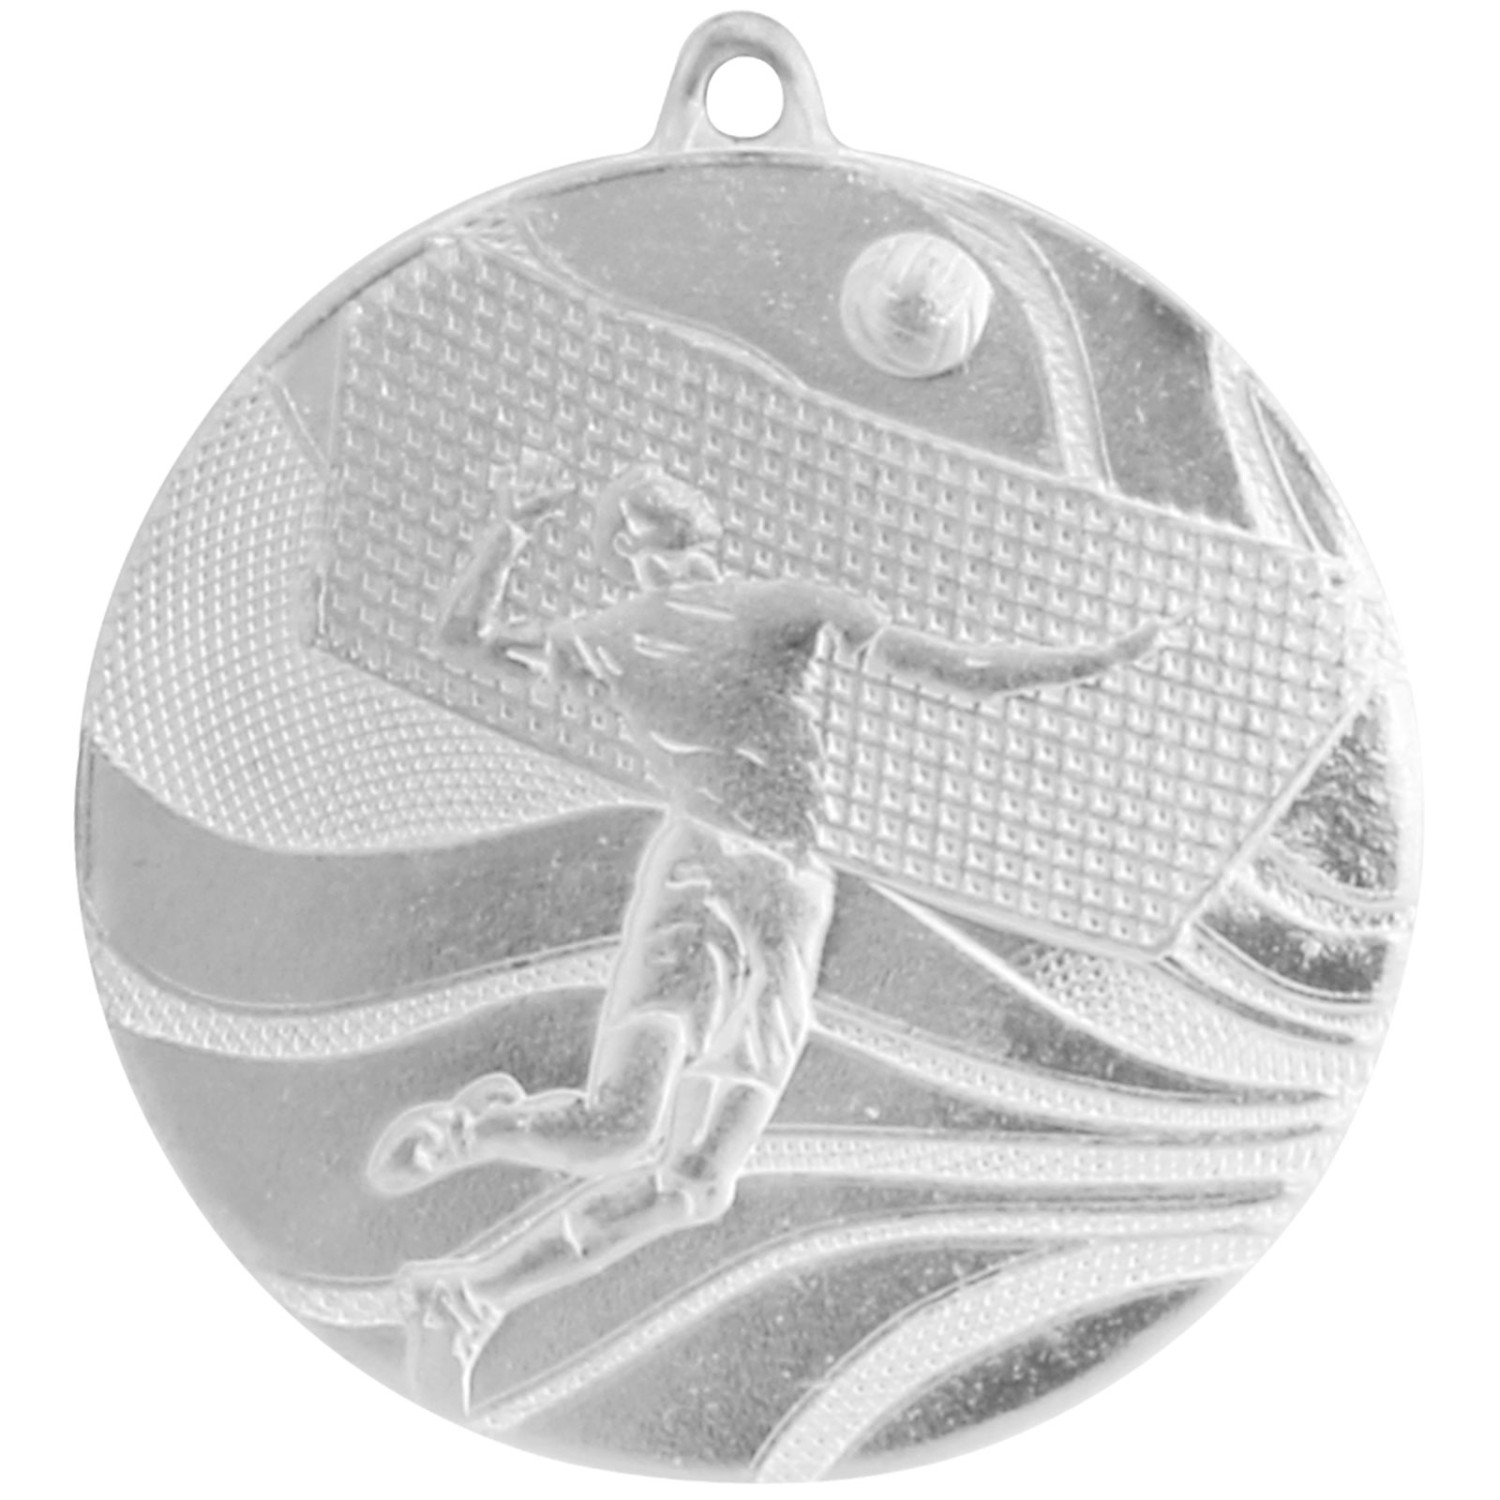 2. Foto Medaille Volleyball gold silber bronze 50 mm Stahl (Sorte: Set je 1x gold / silber / bronze)